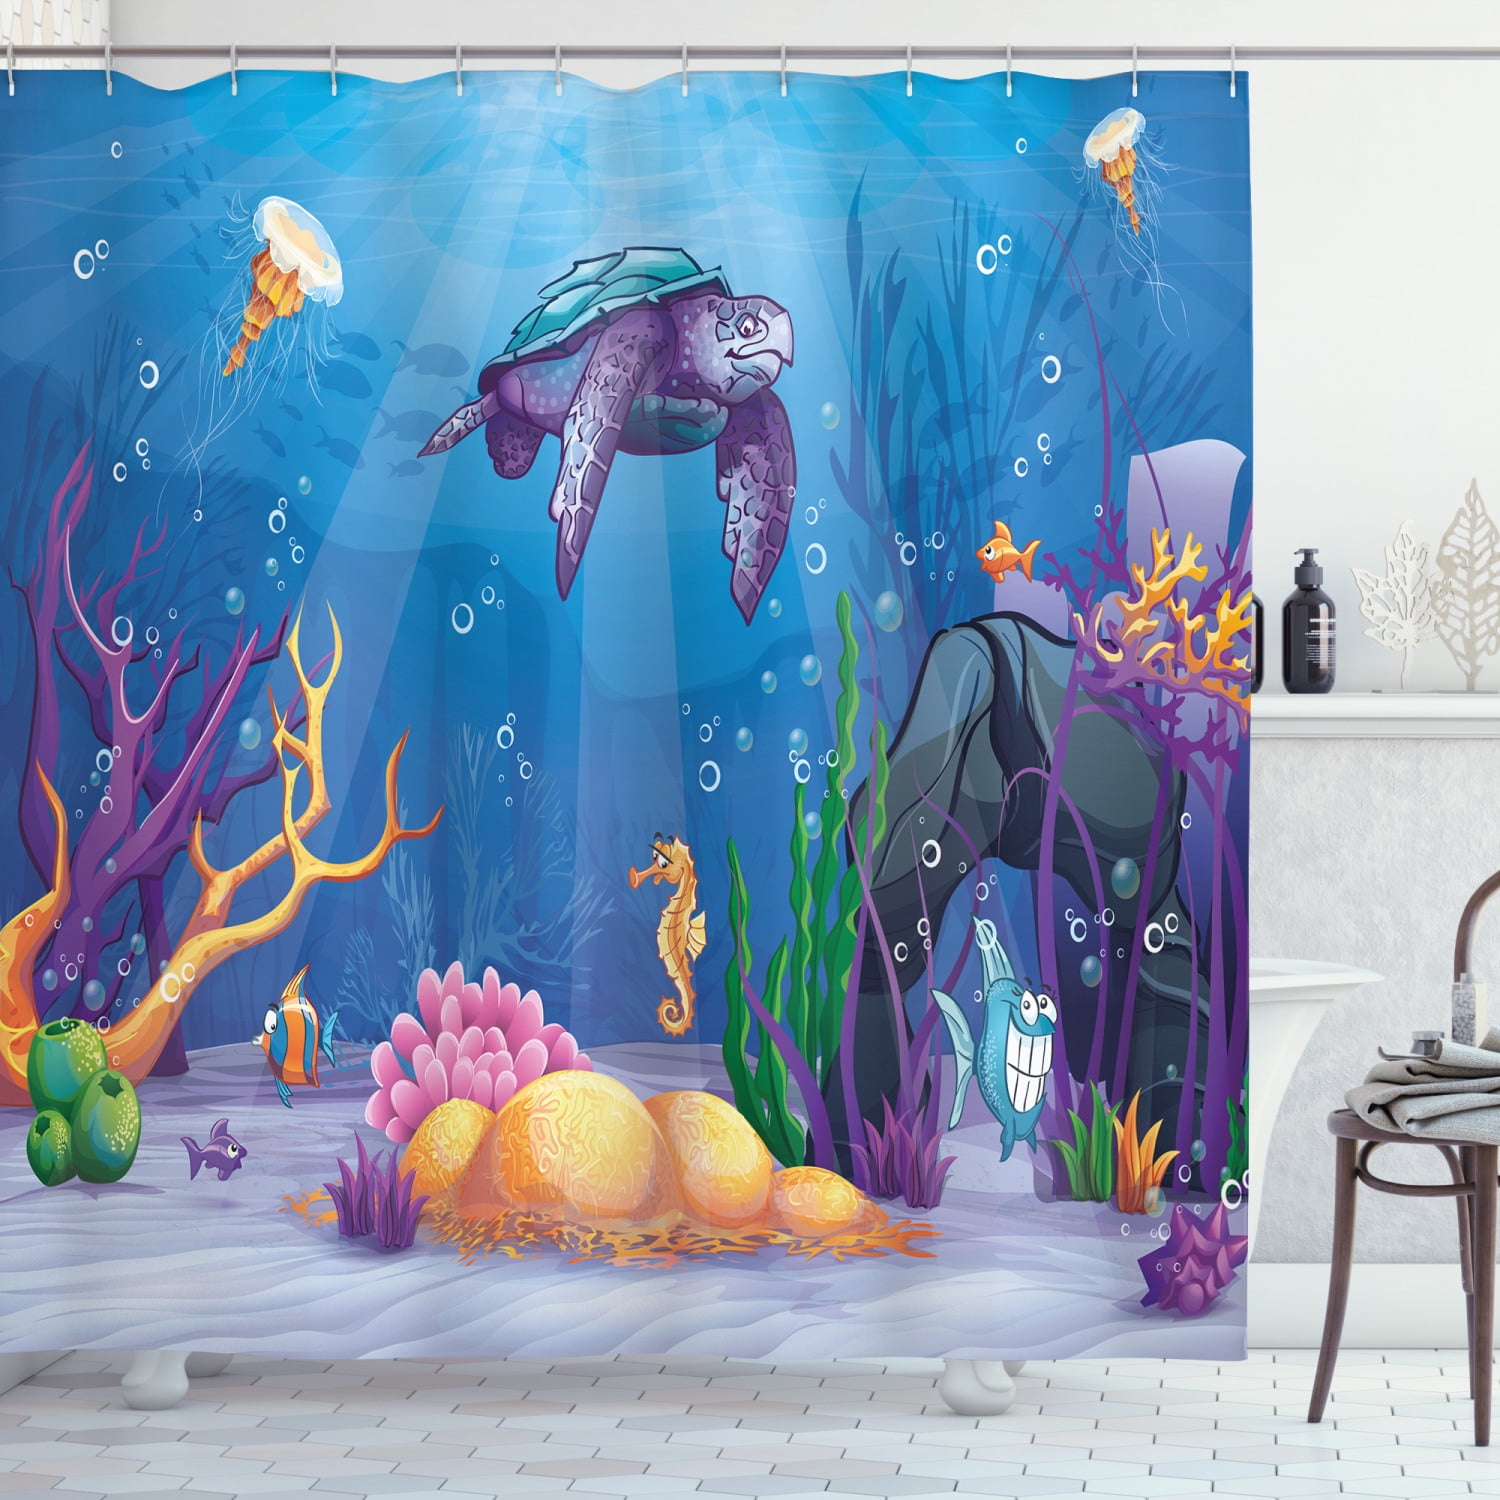 72x72" Fabric Shower Curtain Set Undersea World Magic Glowing Jellyfish Seahorse 